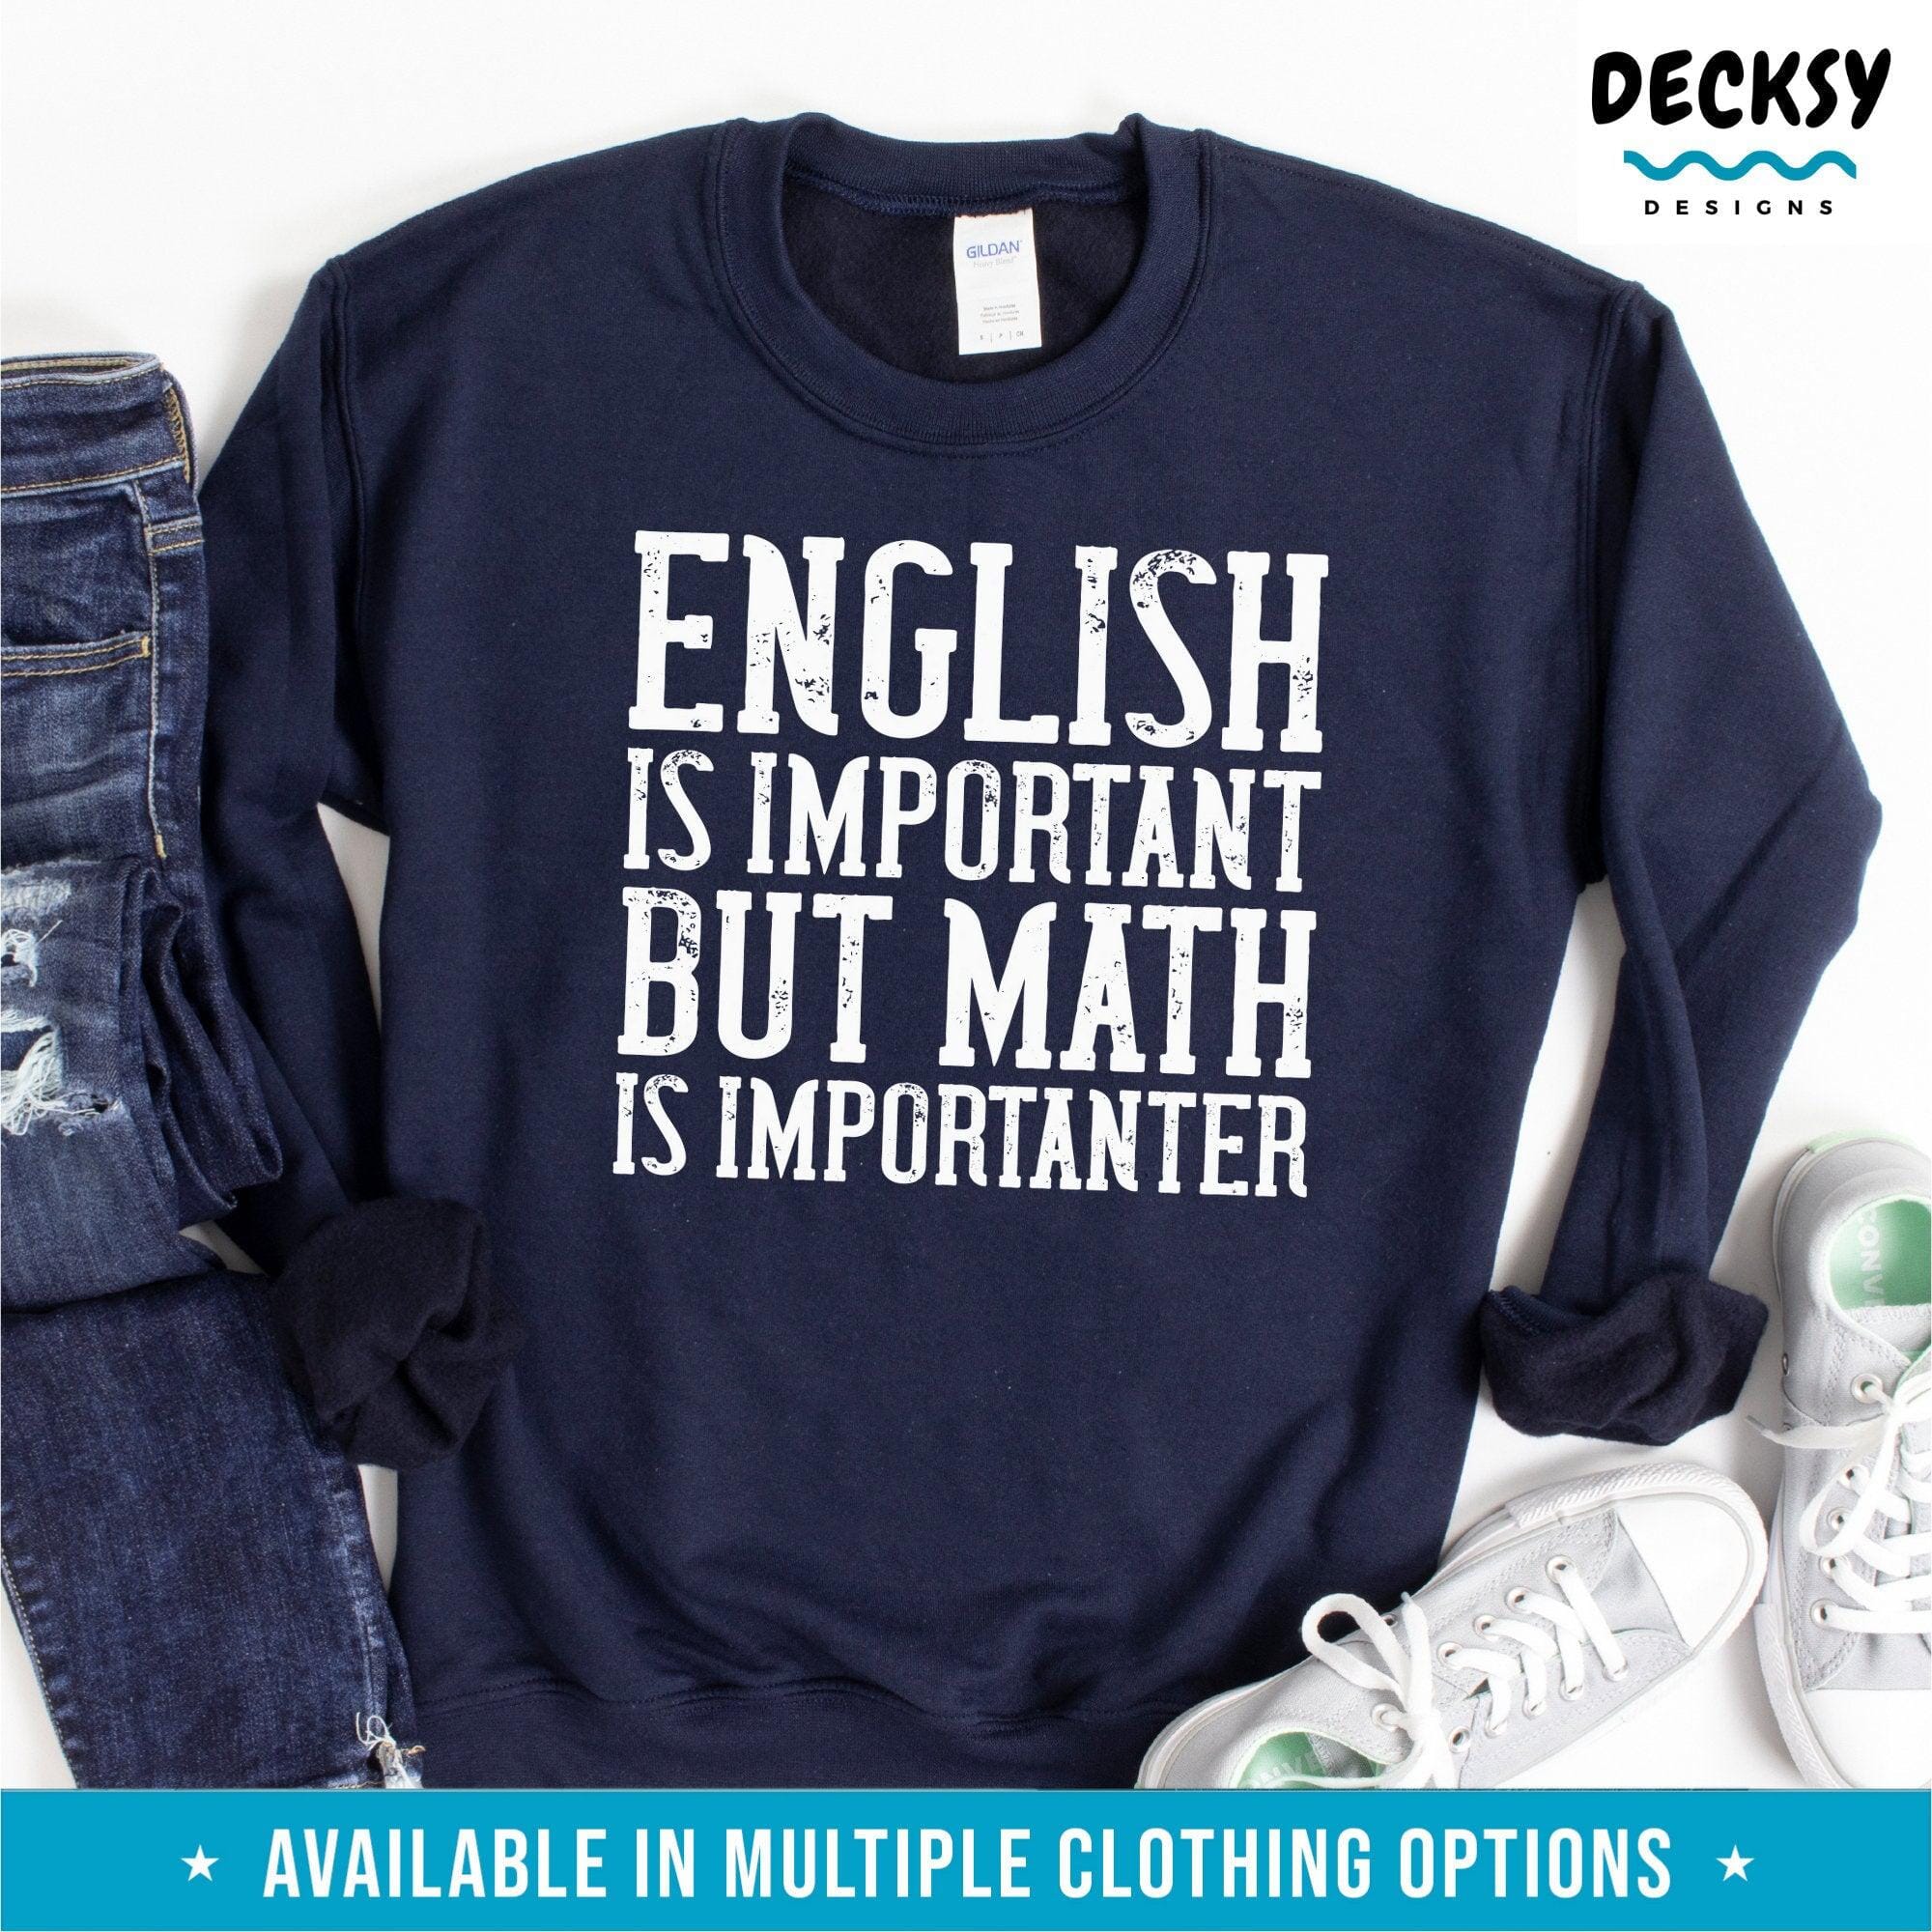 English Tshirt, Teacher Appreciation Gift-Clothing:Gender-Neutral Adult Clothing:Tops & Tees:T-shirts:Graphic Tees-DecksyDesigns